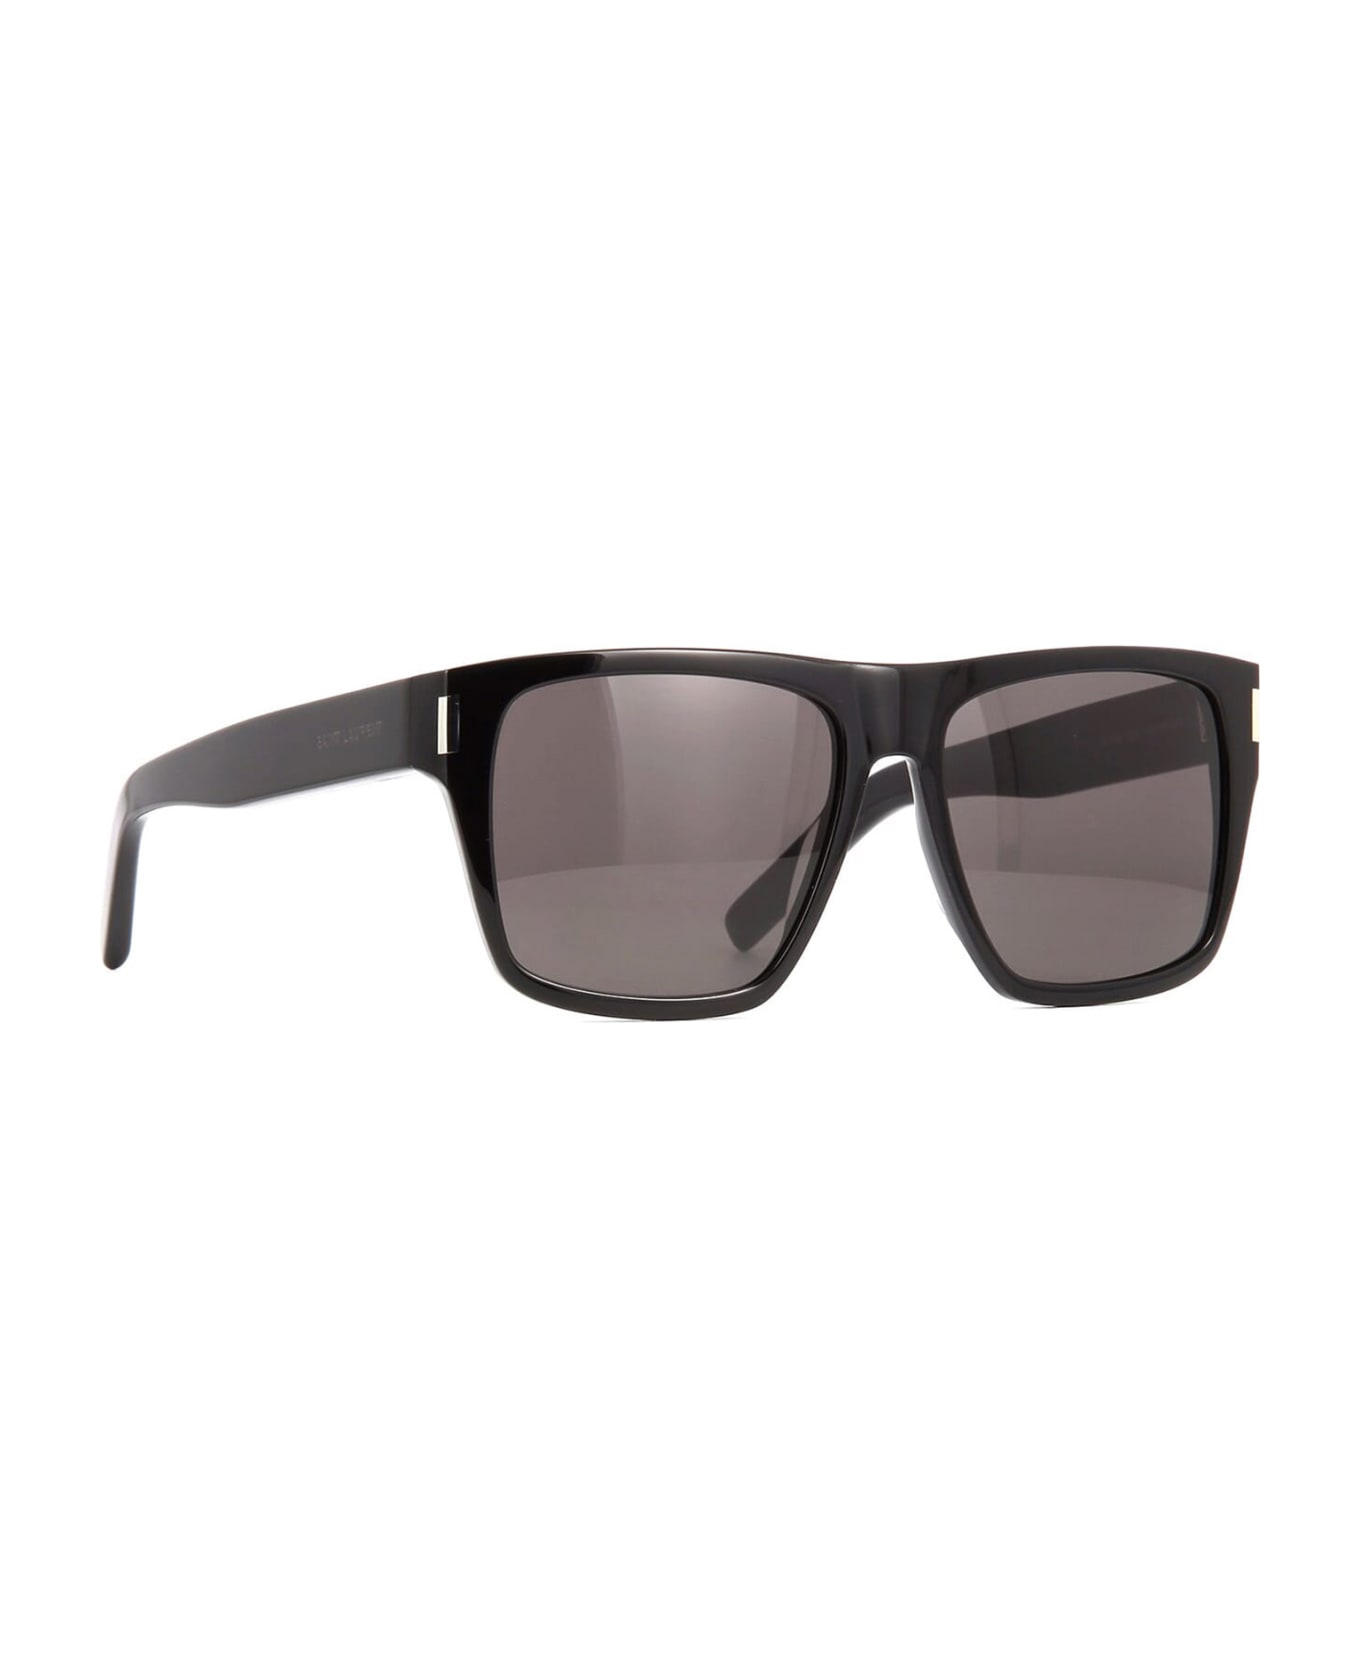 Saint Laurent Eyewear 17dj40r0a - Be3130 Silver Sunglasses